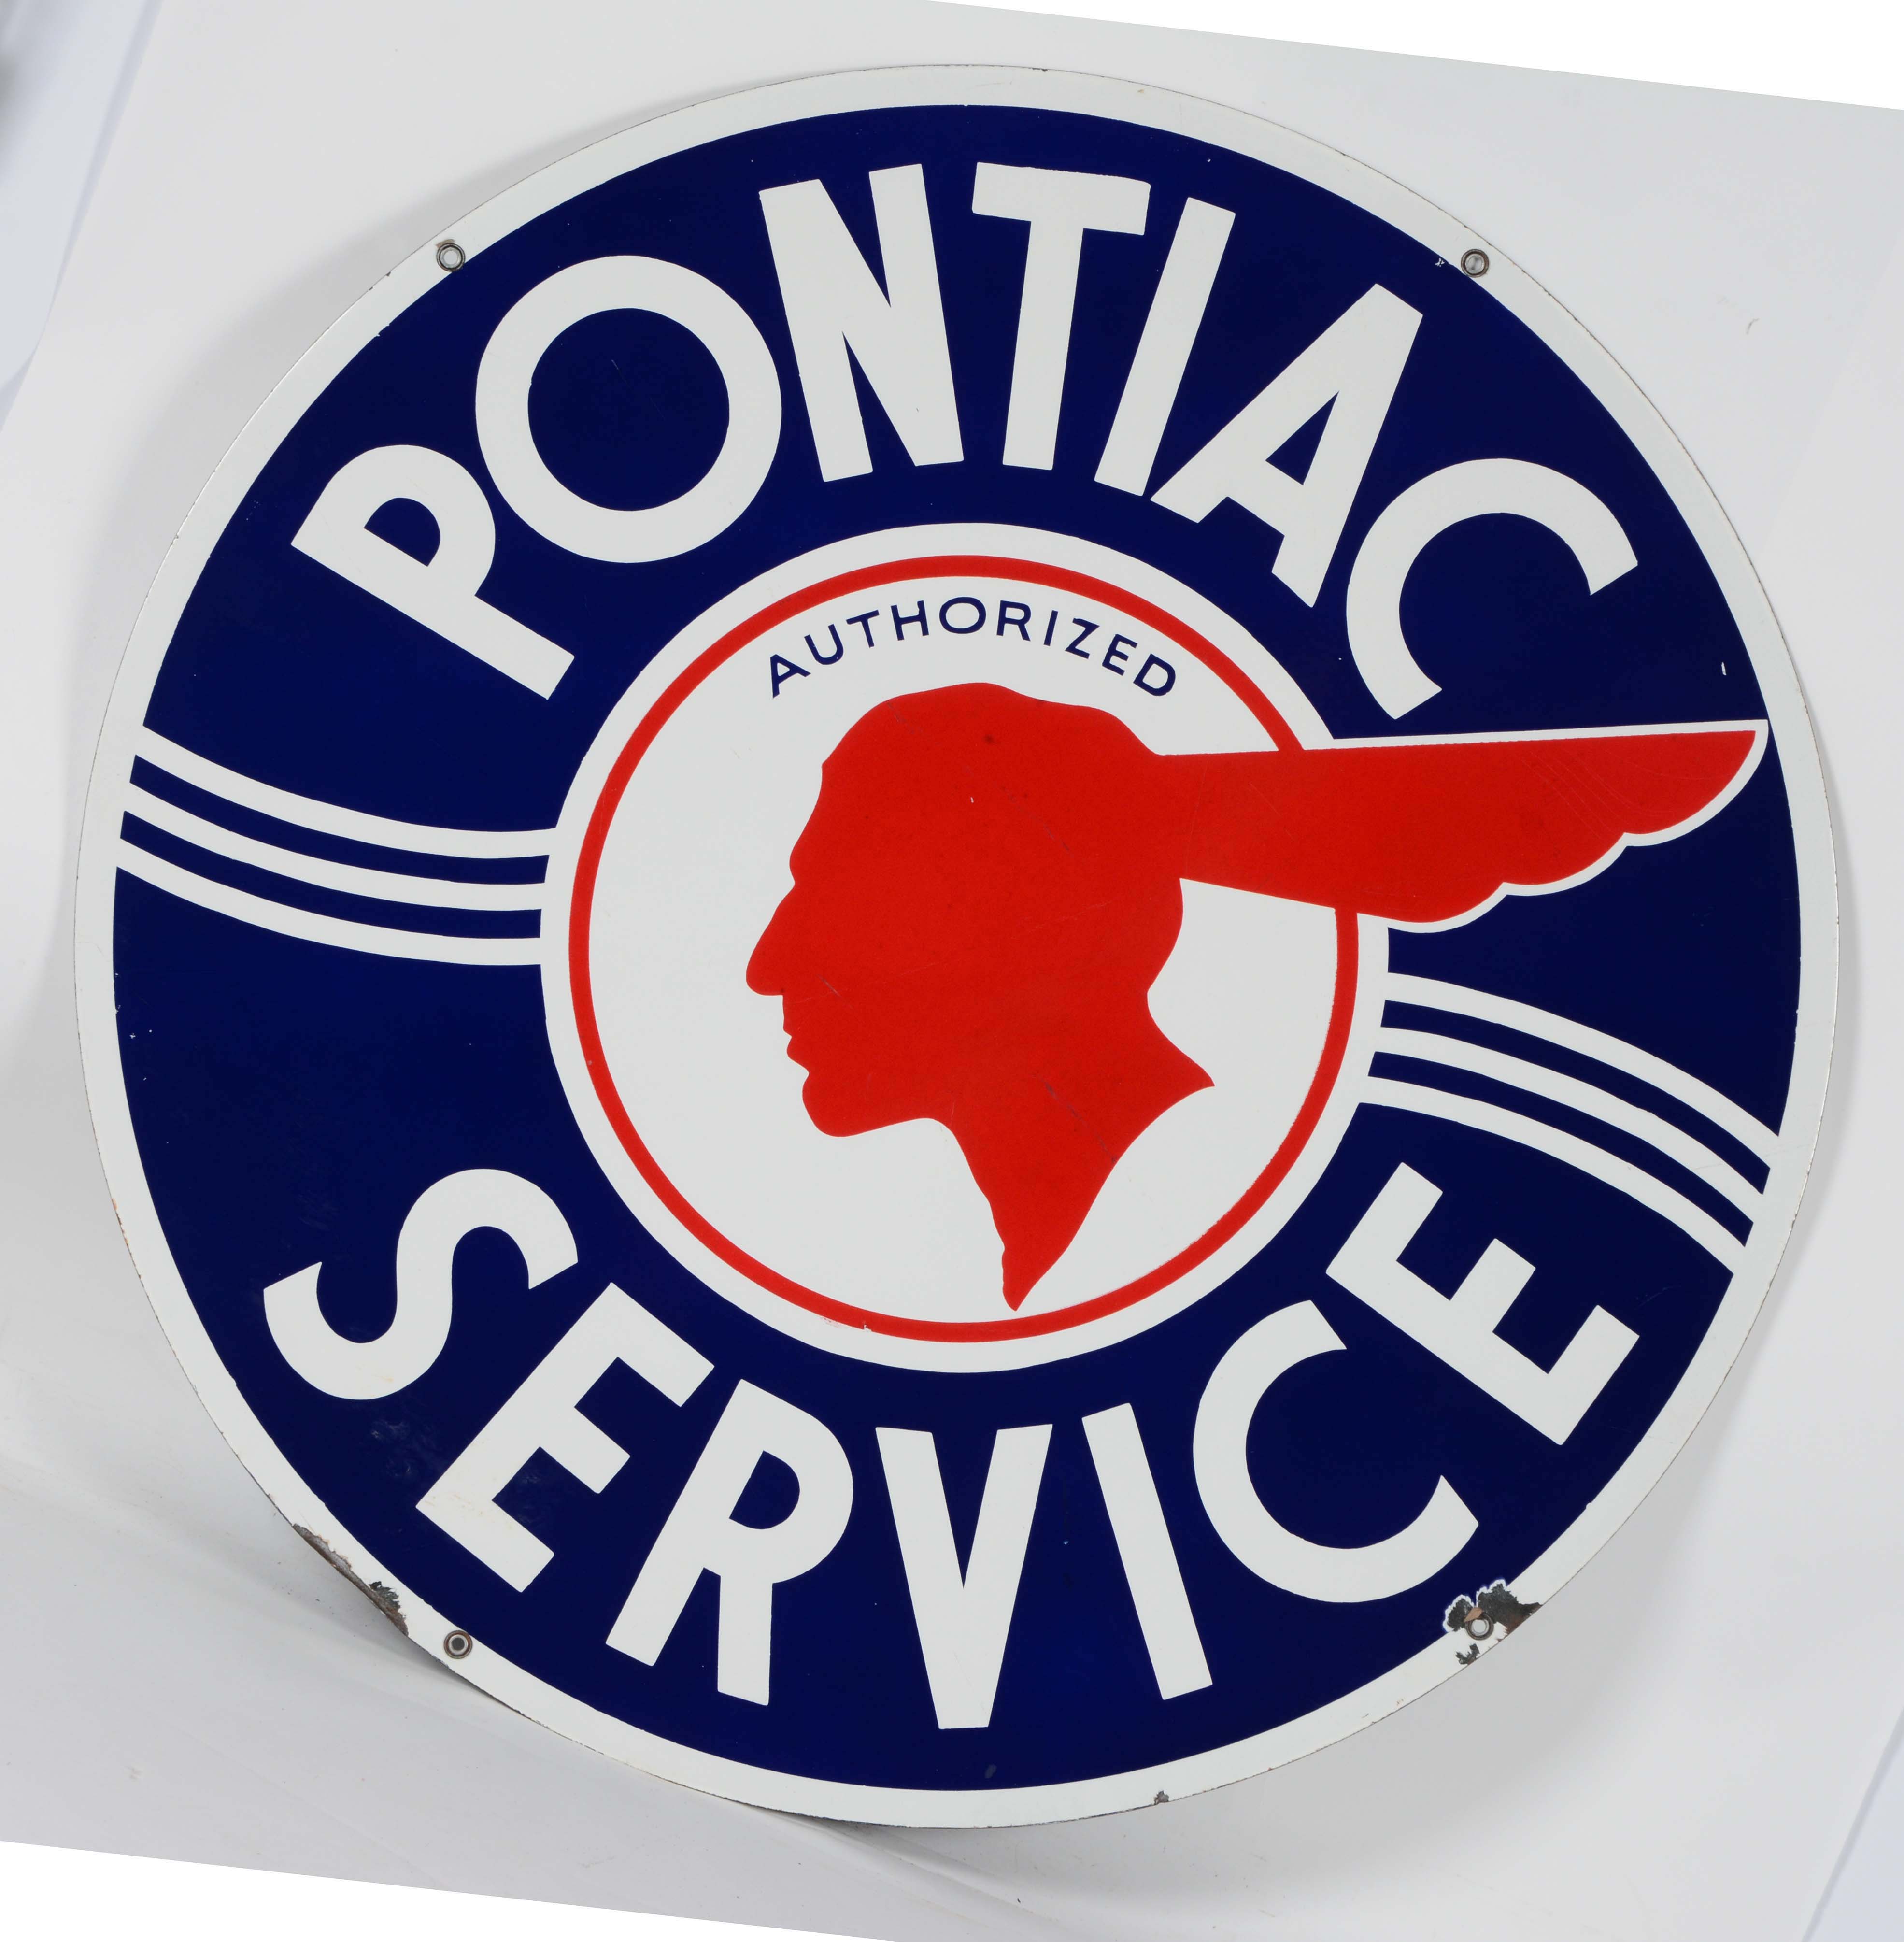 Pontiac Authorized Service Porcelain Sign, estimated at $6,000-9,000.